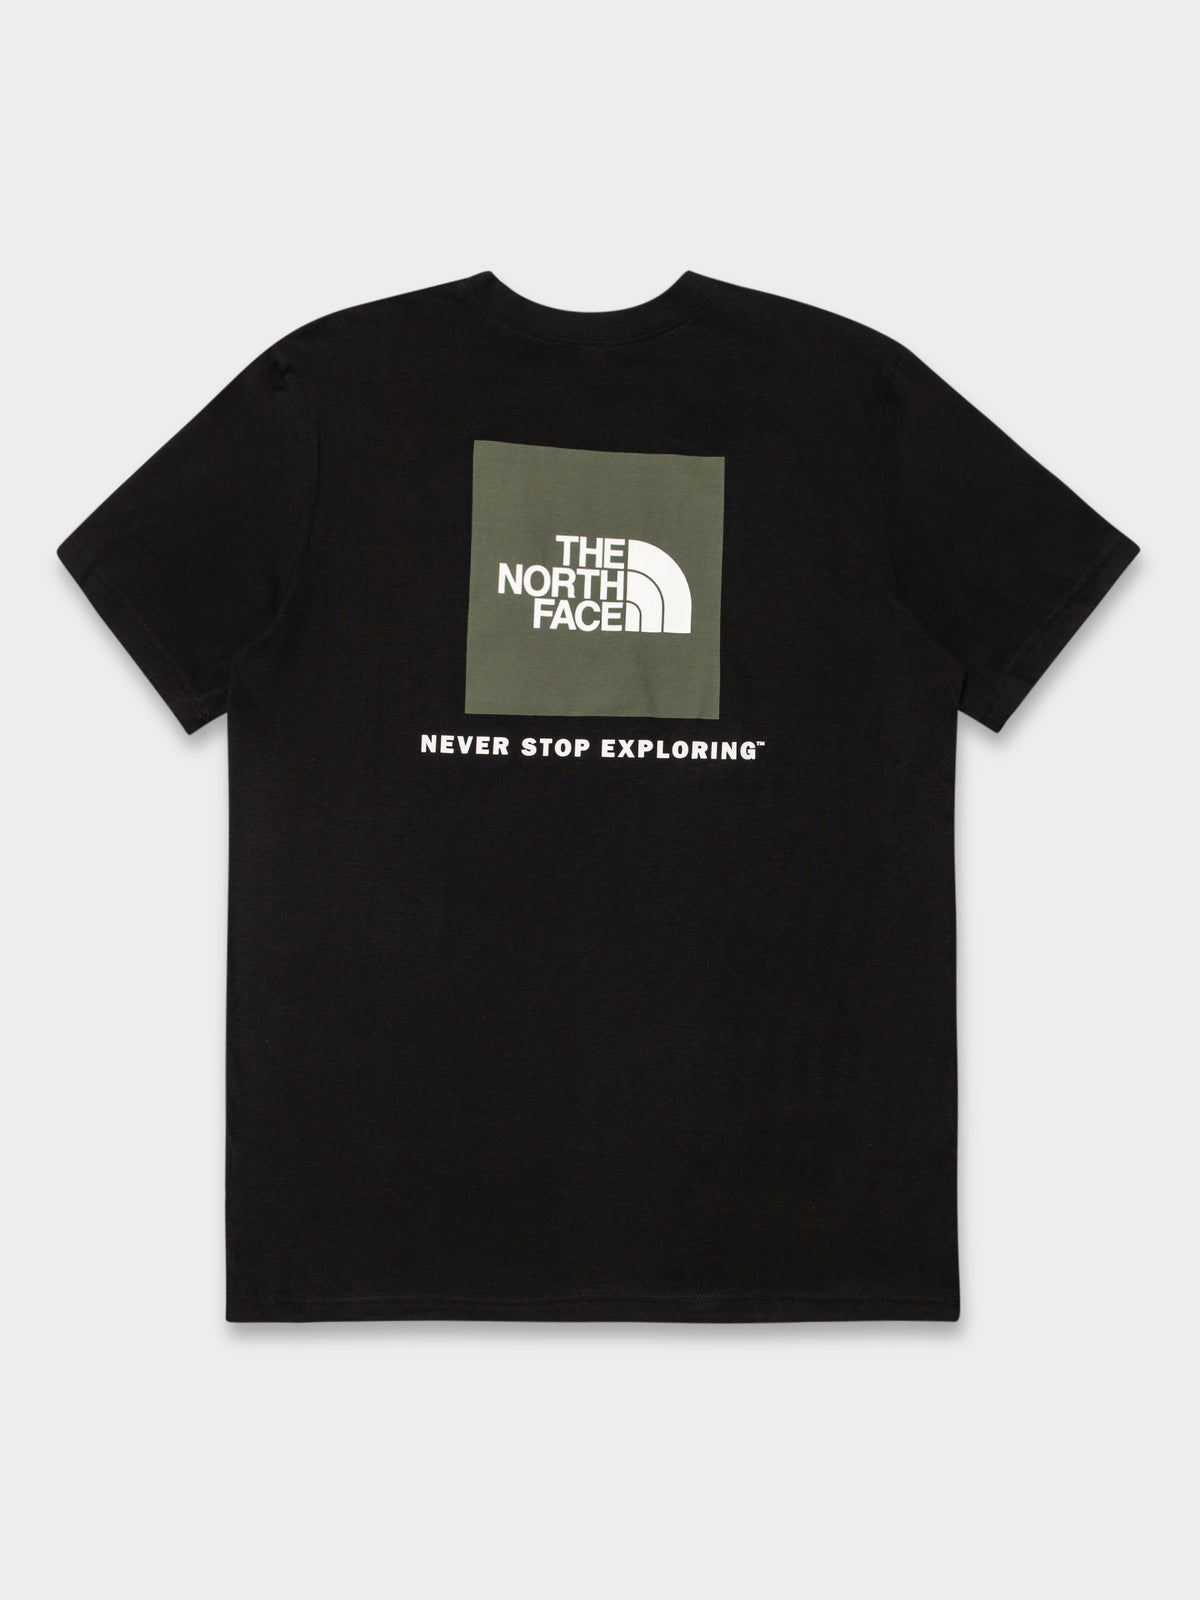 Box NSE T-Shirt in Black